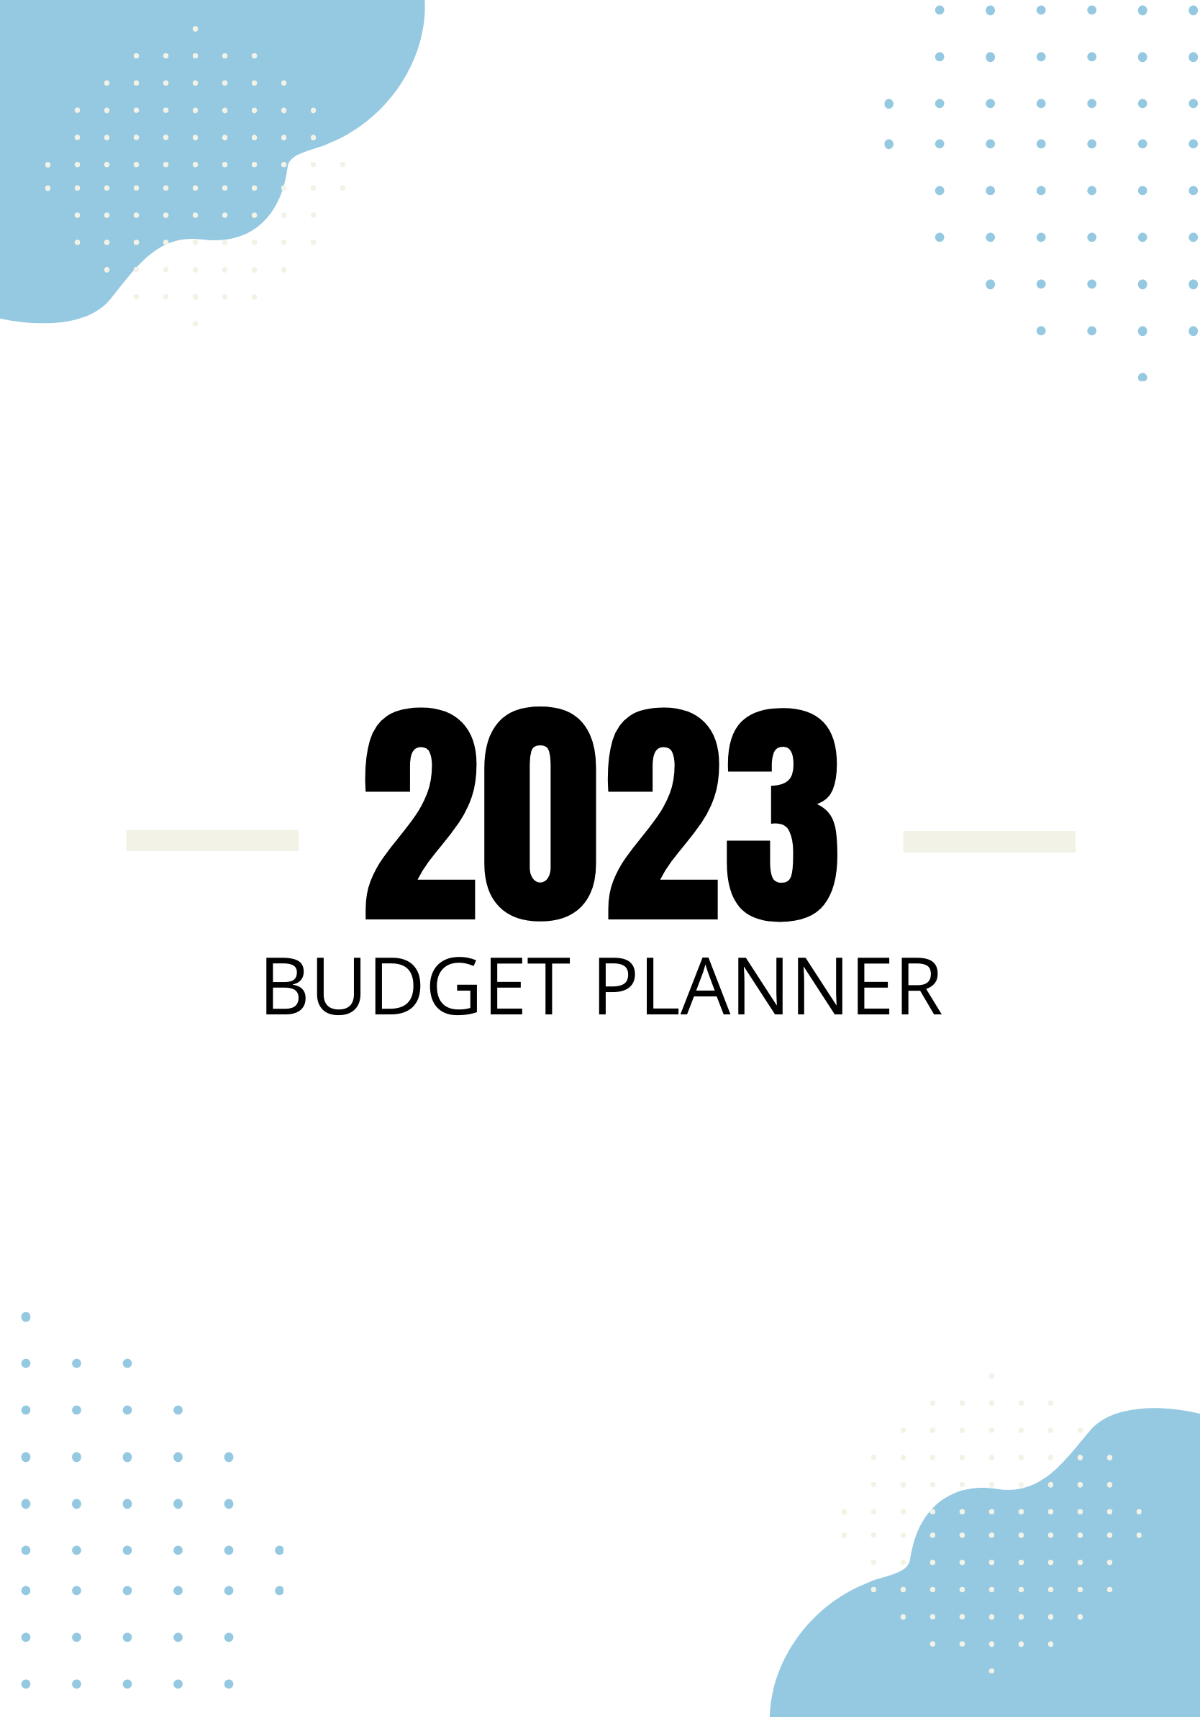 2023 Budget Planner Template